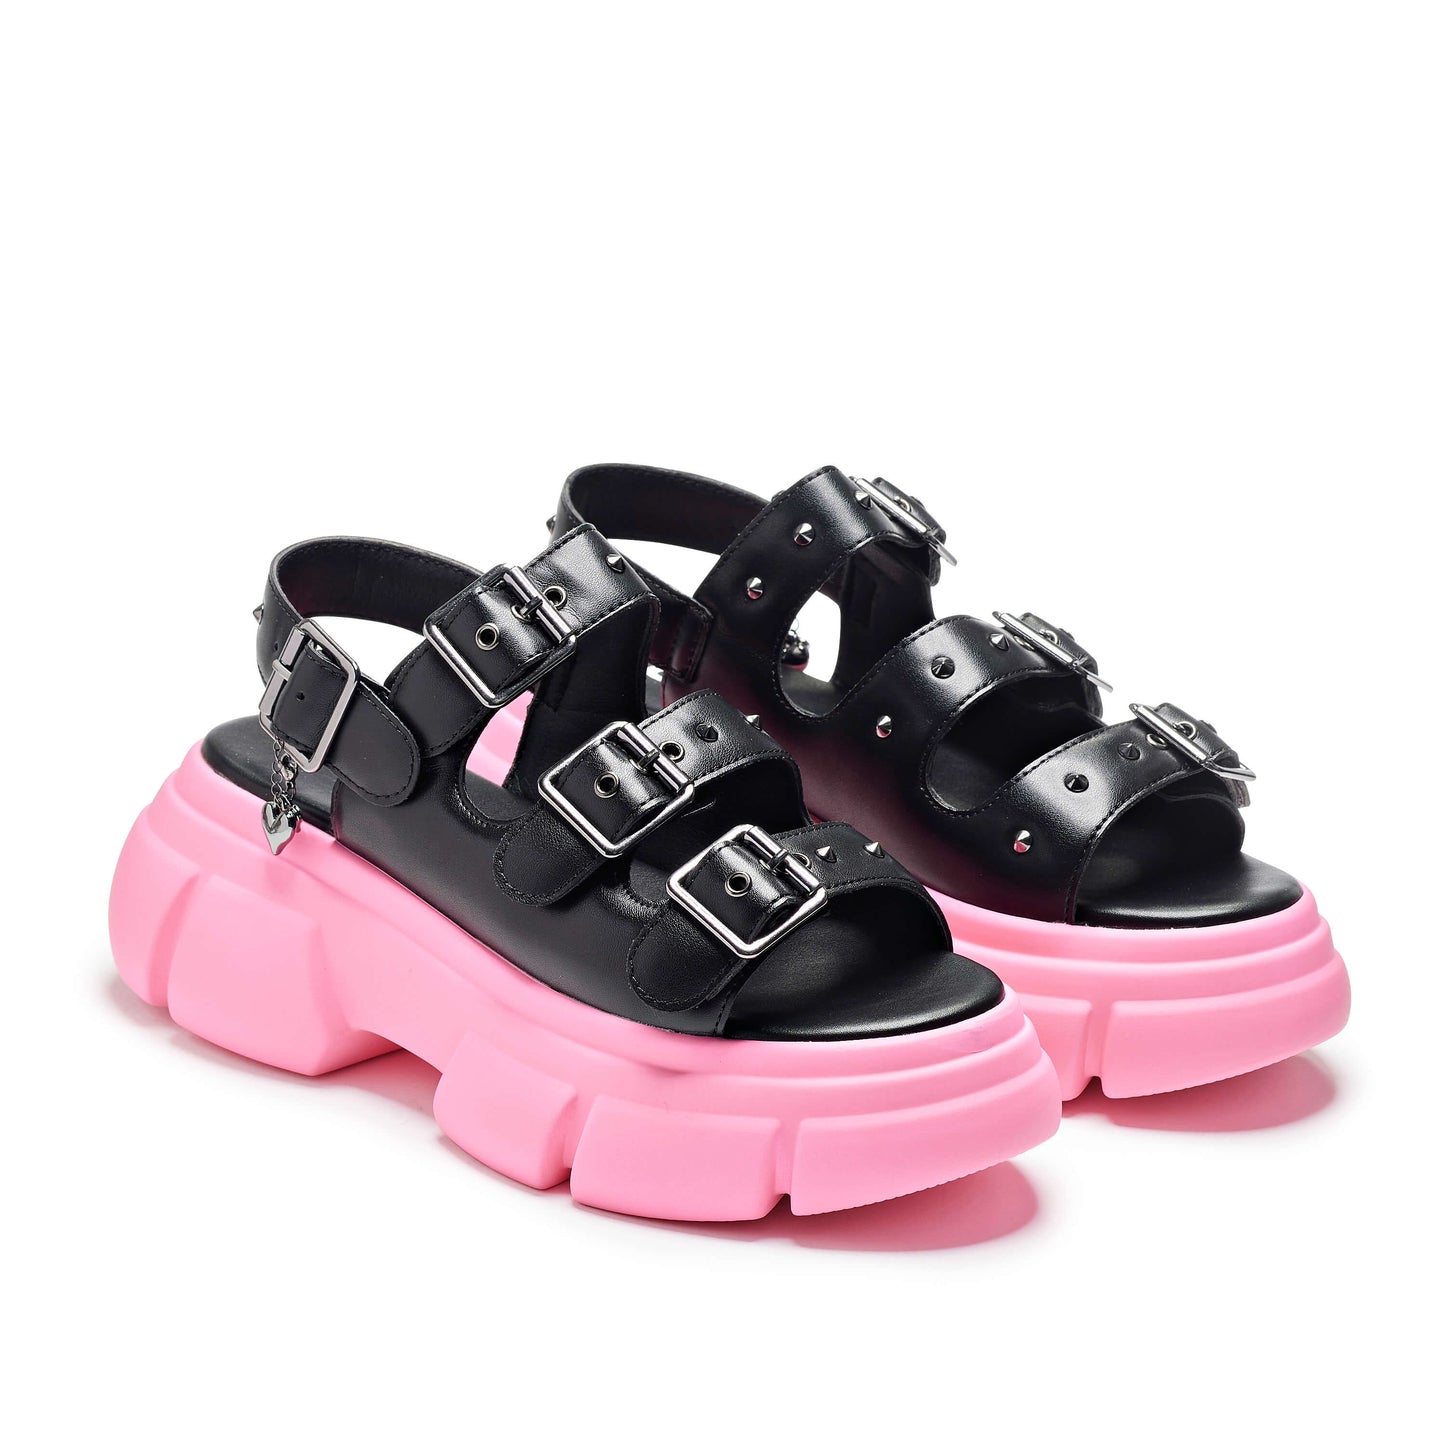 Sticky Secrets Chunky Pink Sandals - Sandals - KOI Footwear - Pink - Three-Quarter View